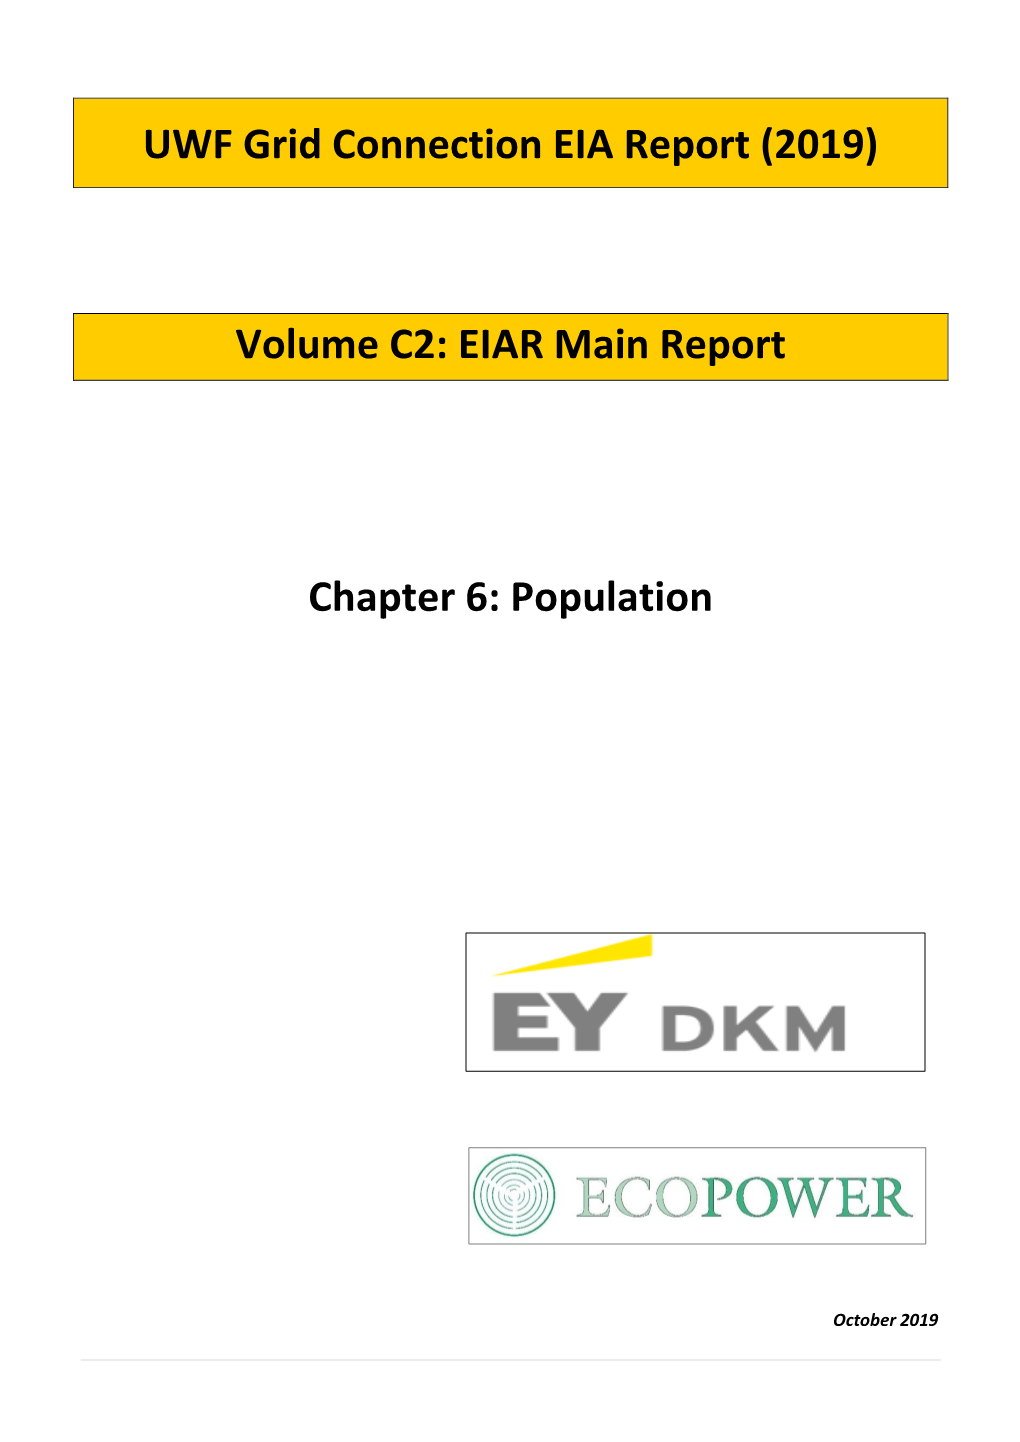 EIAR2019 Chapter 6 Population.Pdf [PDF]